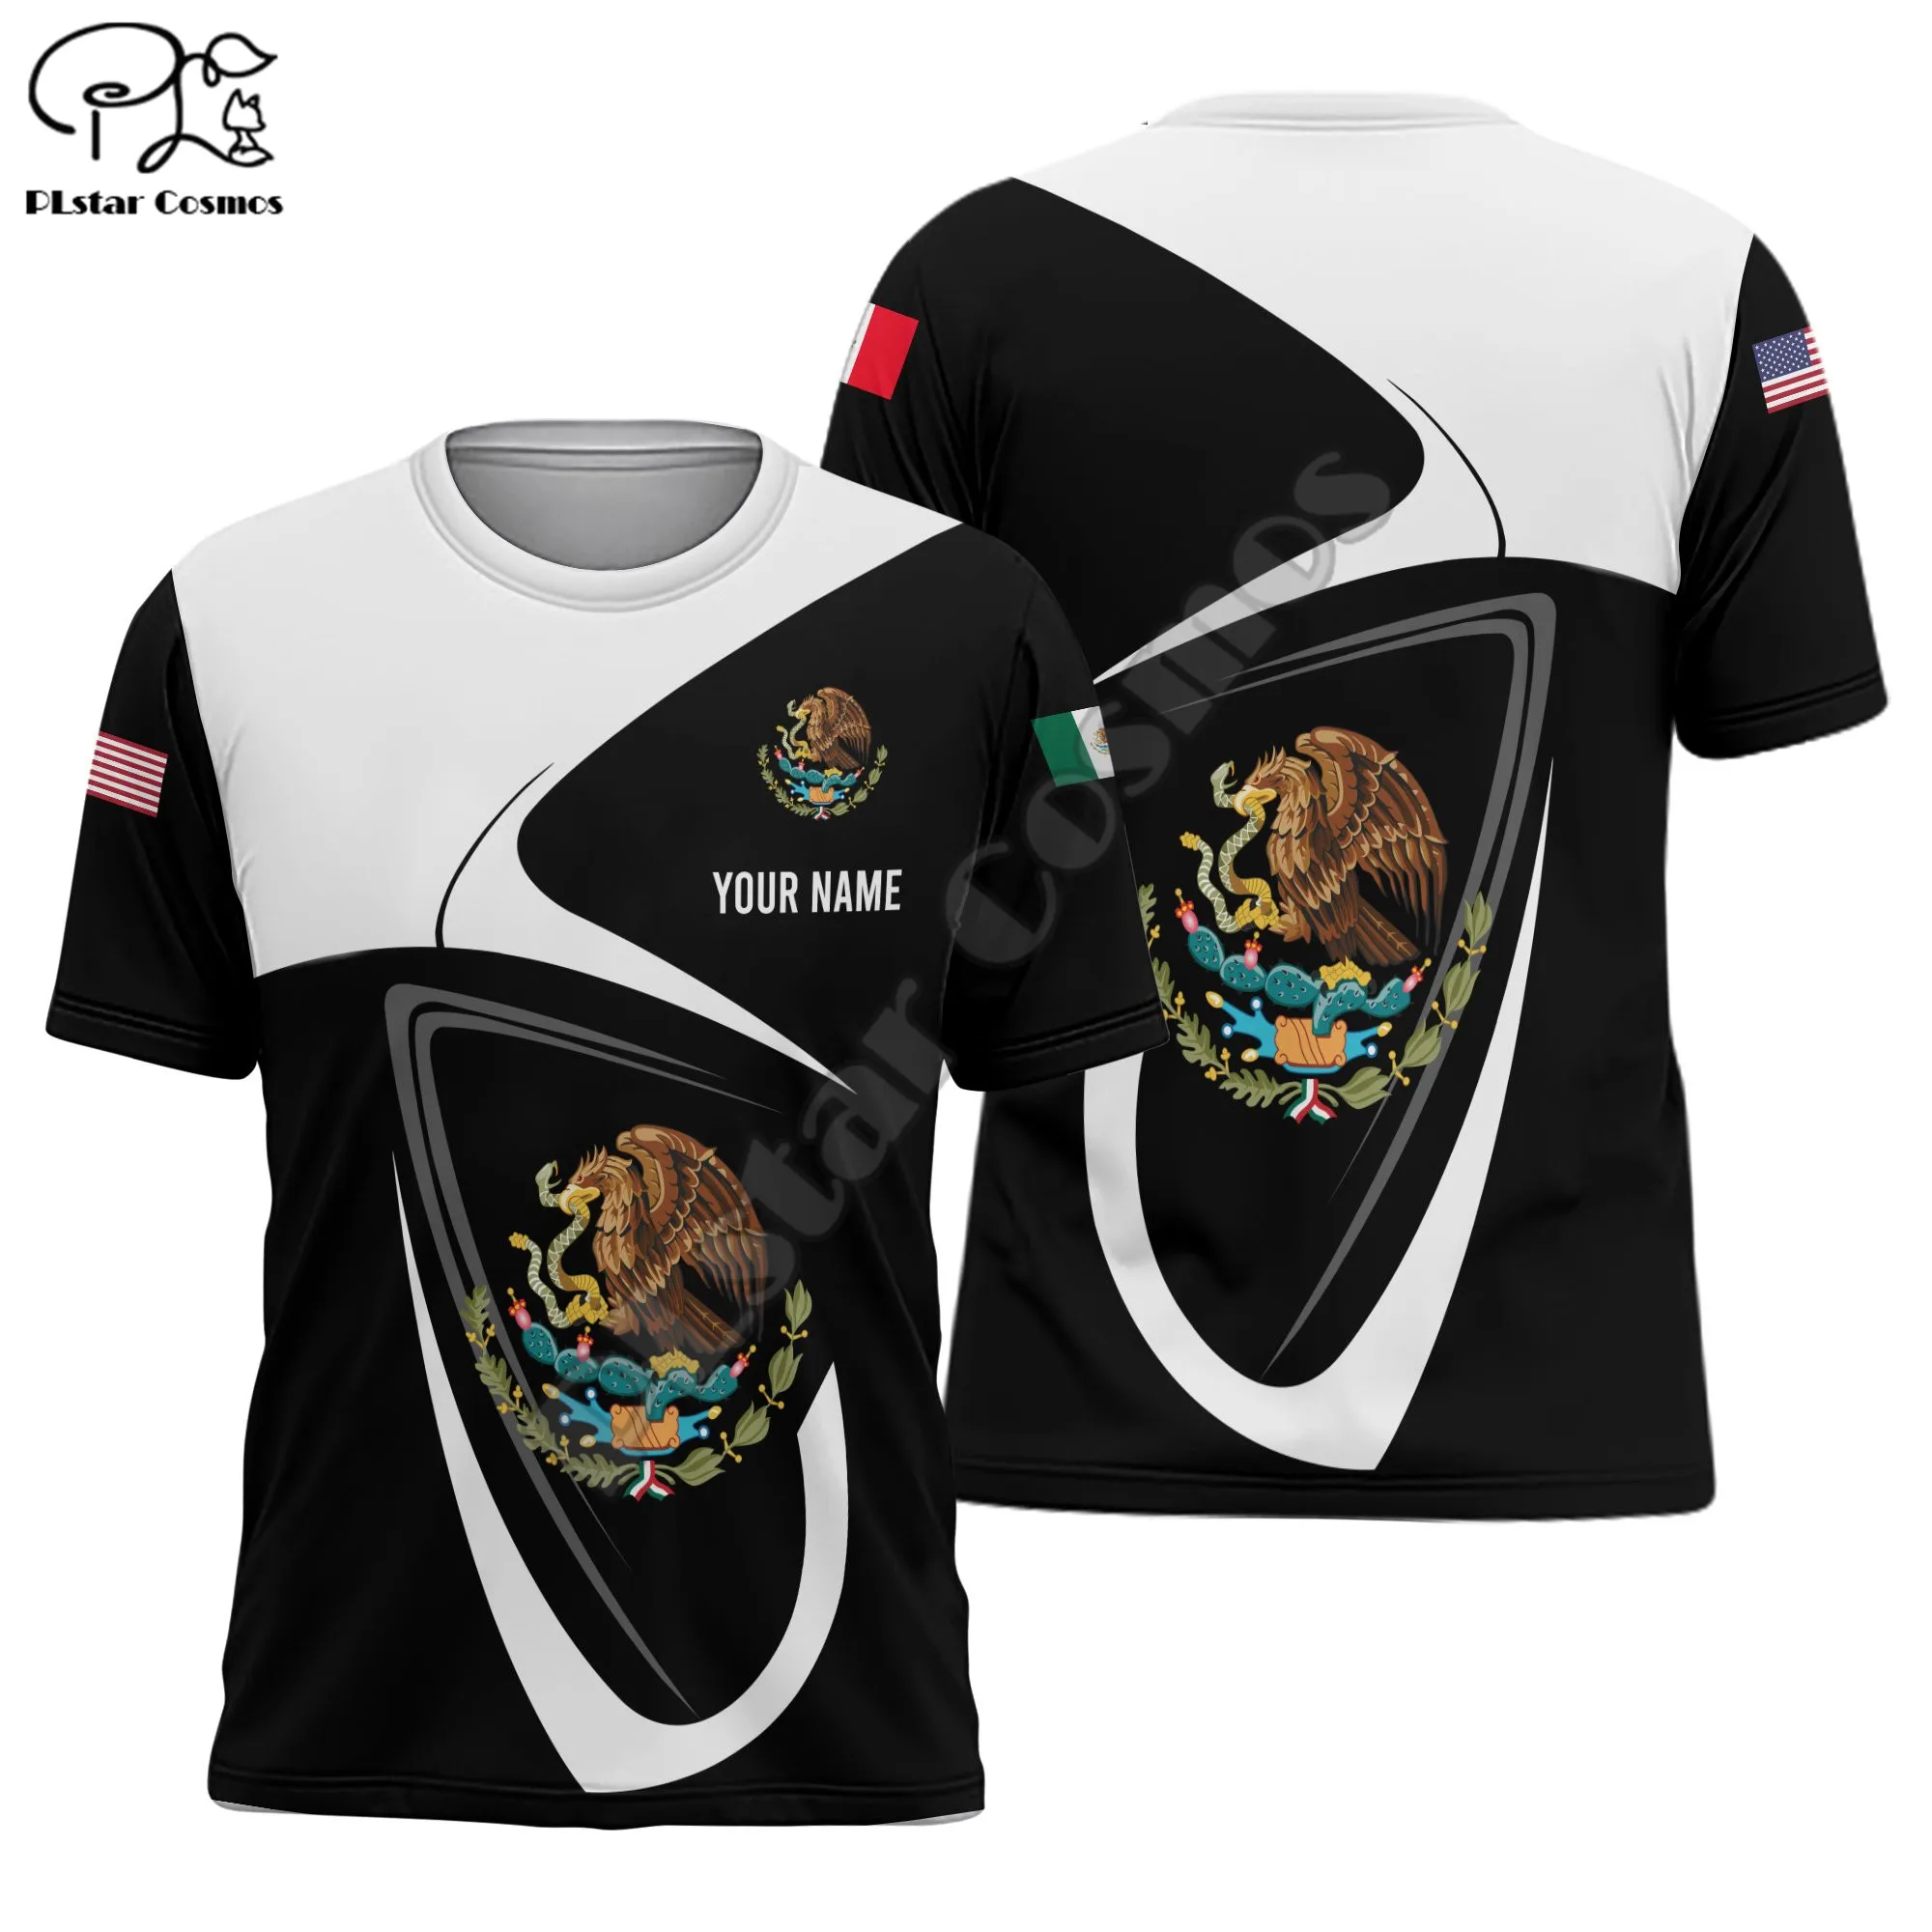 PLstar Cosmos emblema nacional de México bandera 3D verano impreso camisetas de manga corta Camiseta hombres/prendas de calle mujer Casual estilo-35